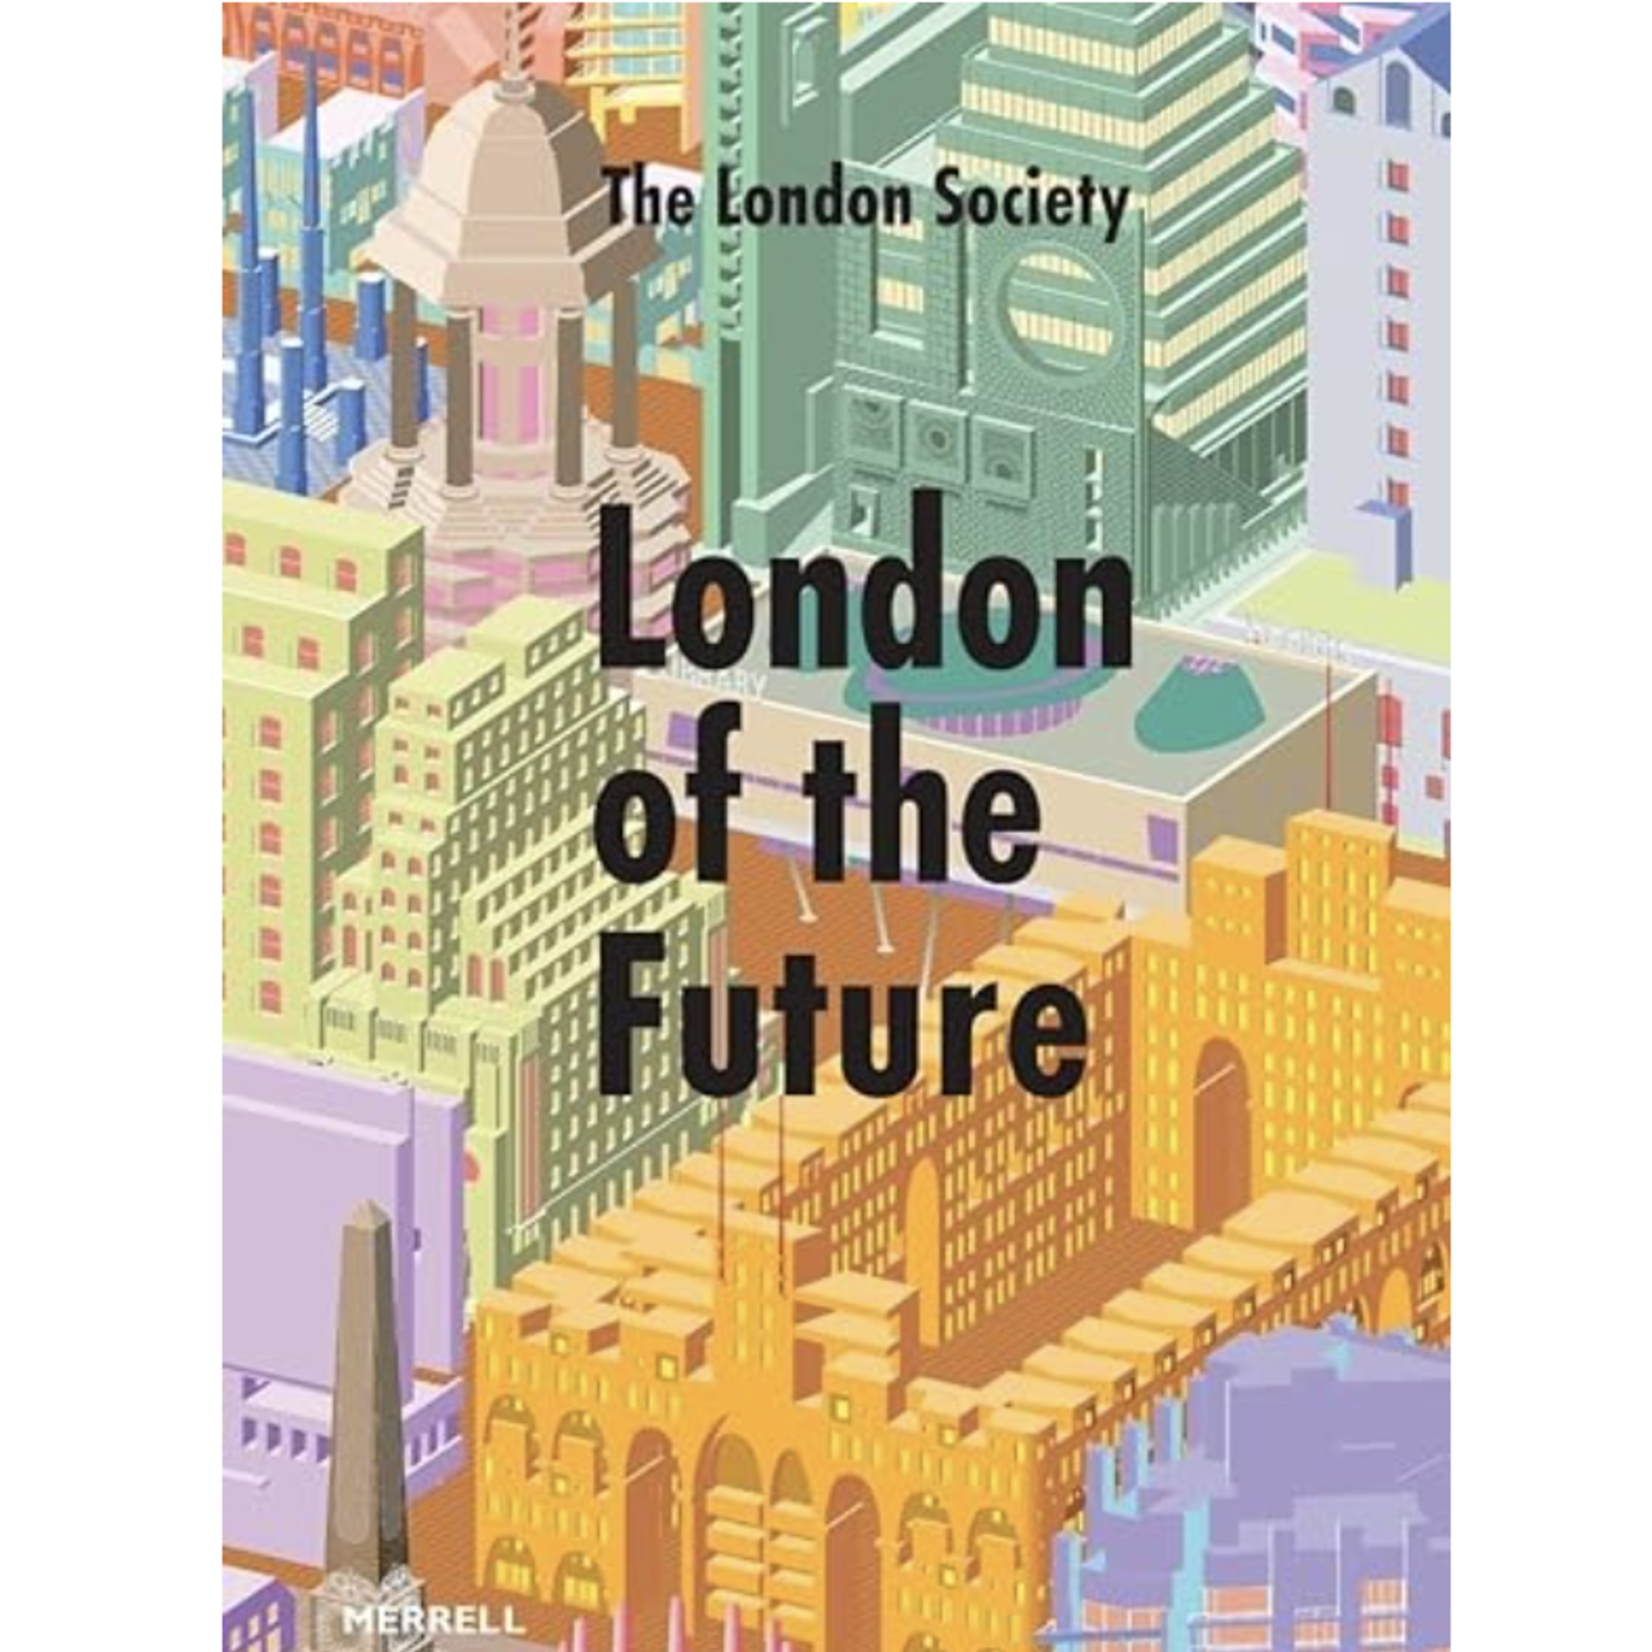 London of the Future